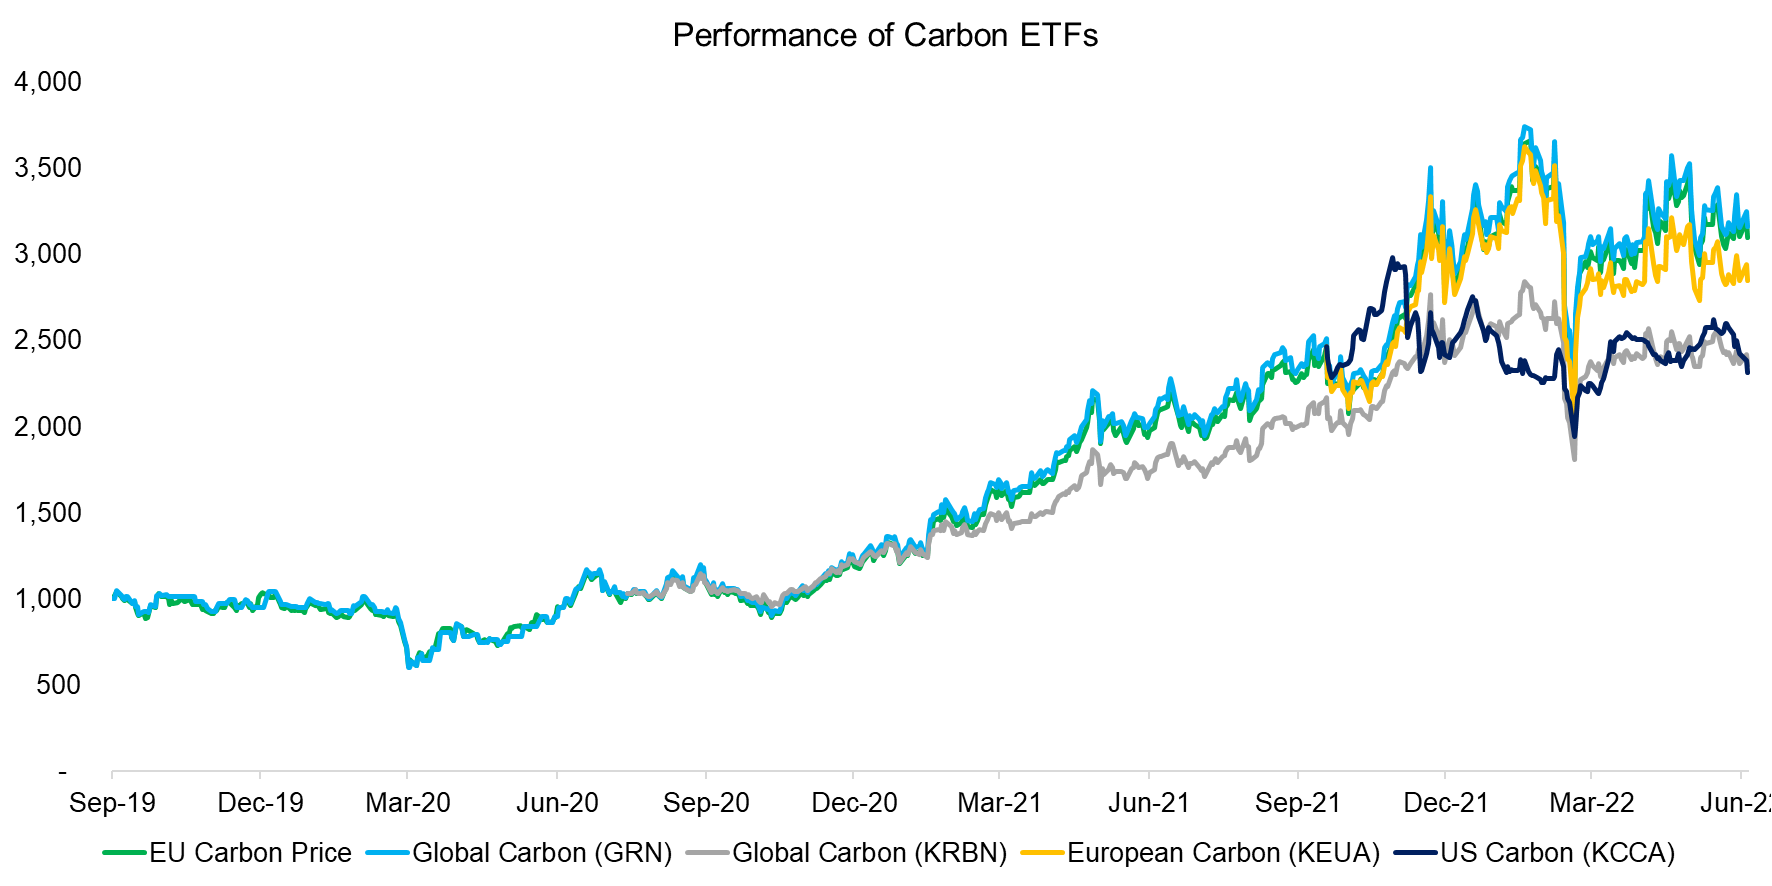 Performance of Carbon ETFs